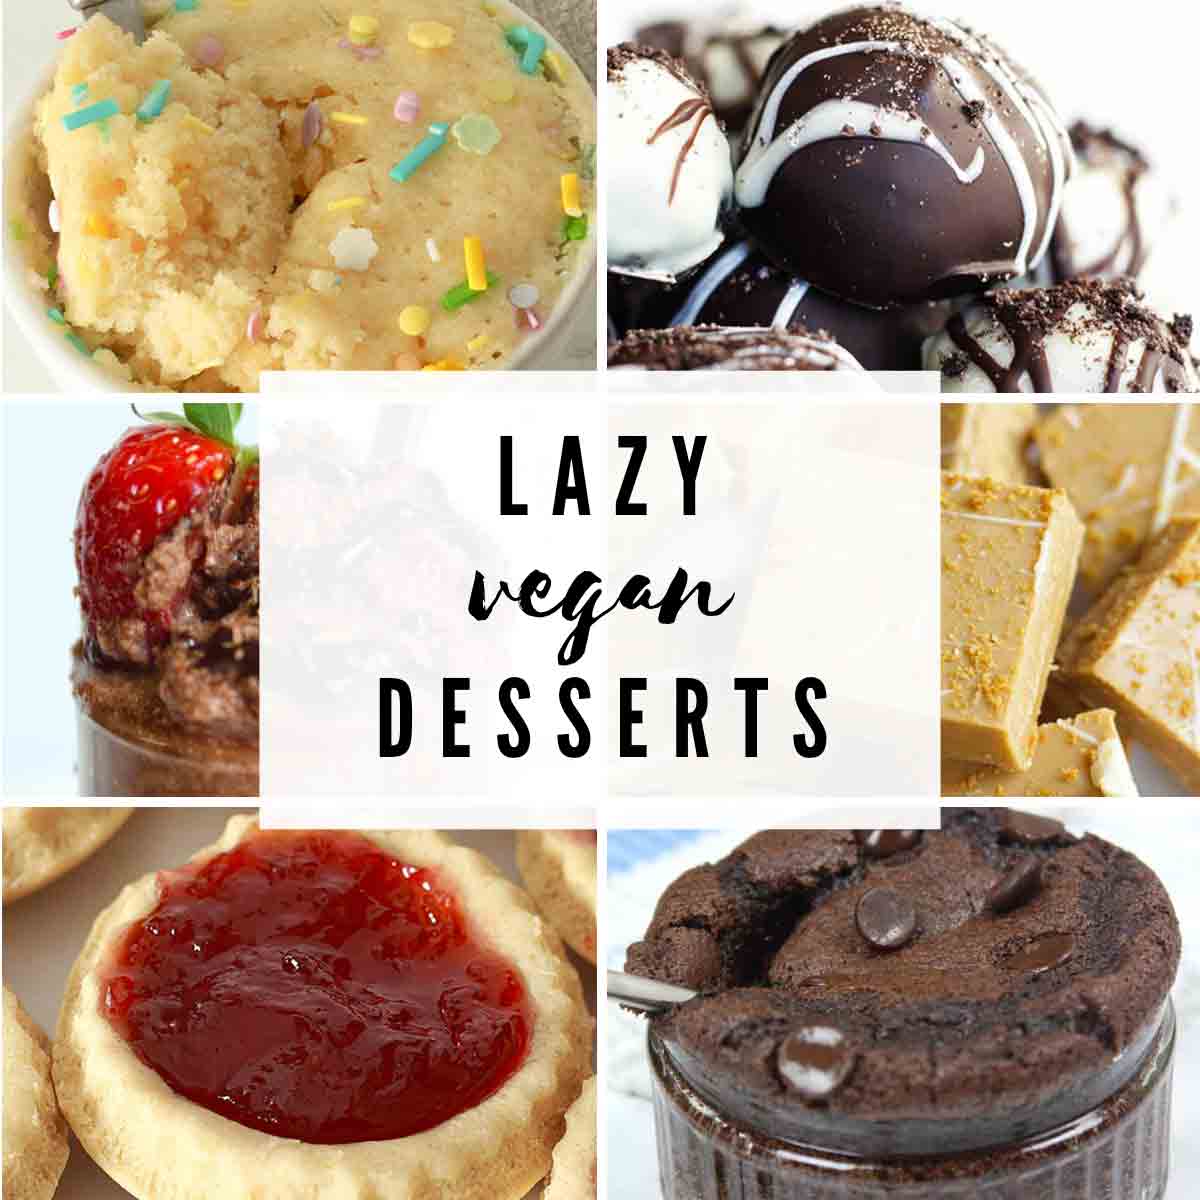 6 Images Of Lazy Vegan Desserts